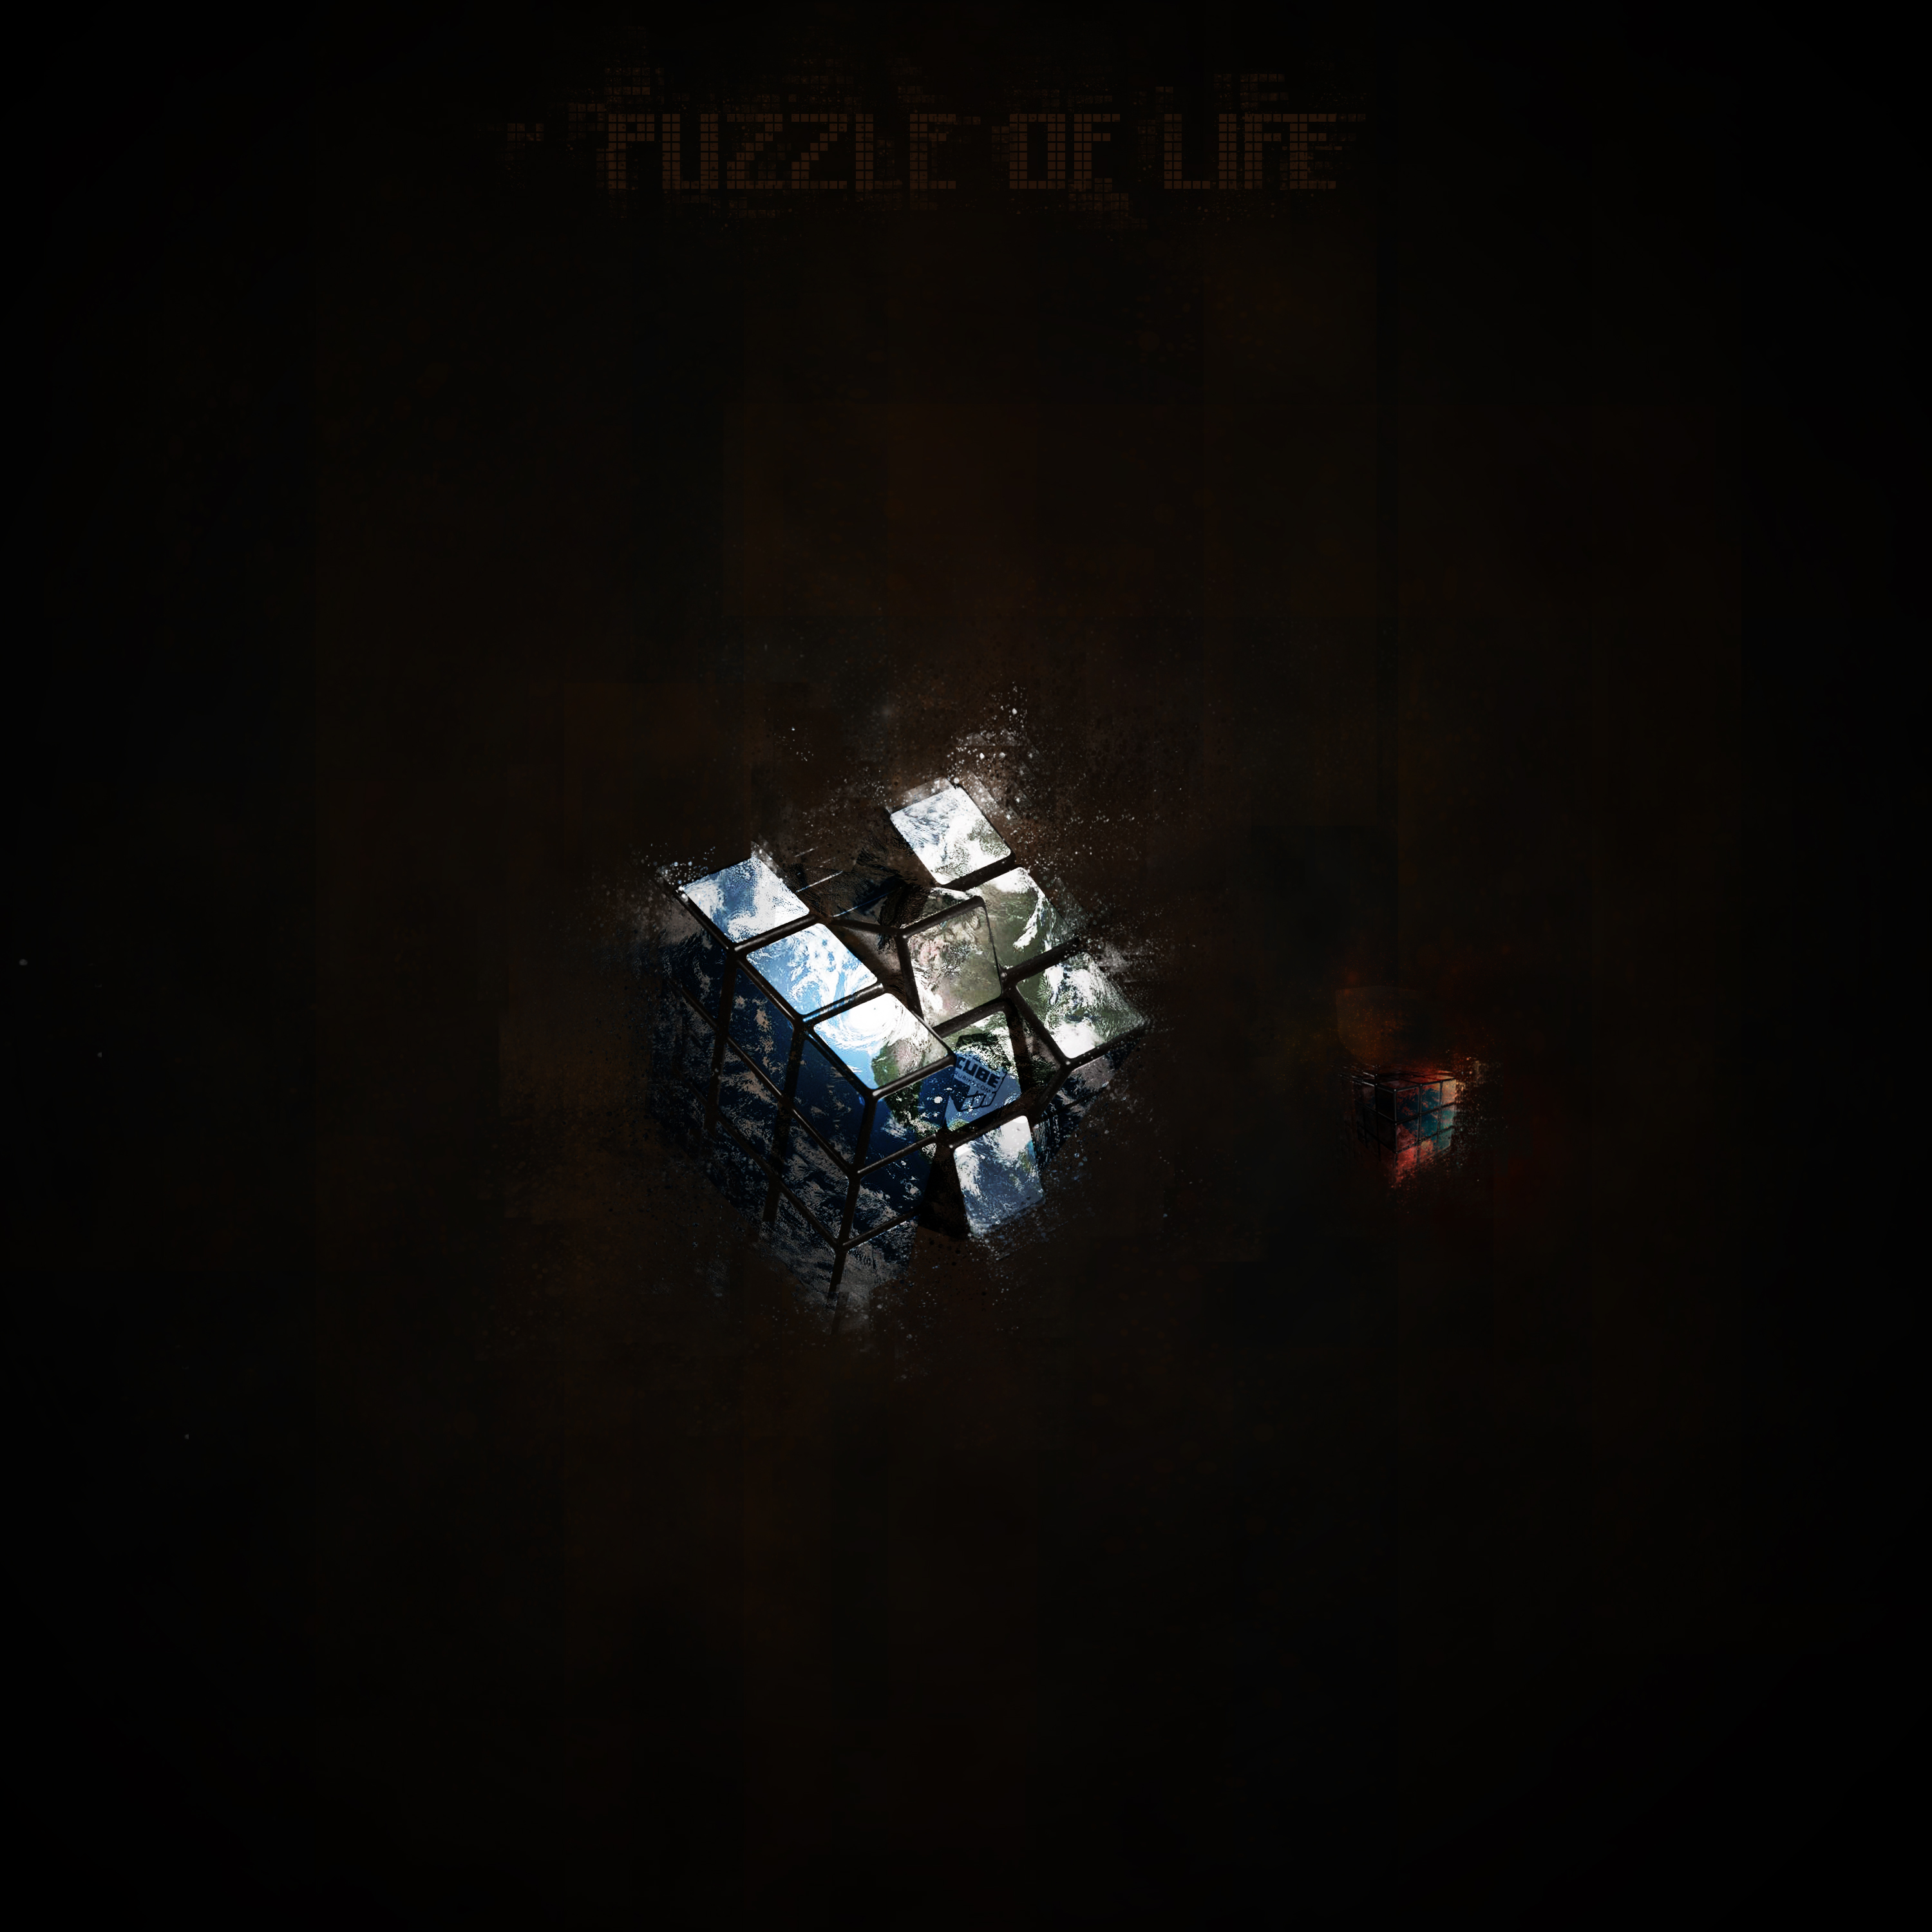 Puzzle_of_life_by_JourdainTSC.jpg